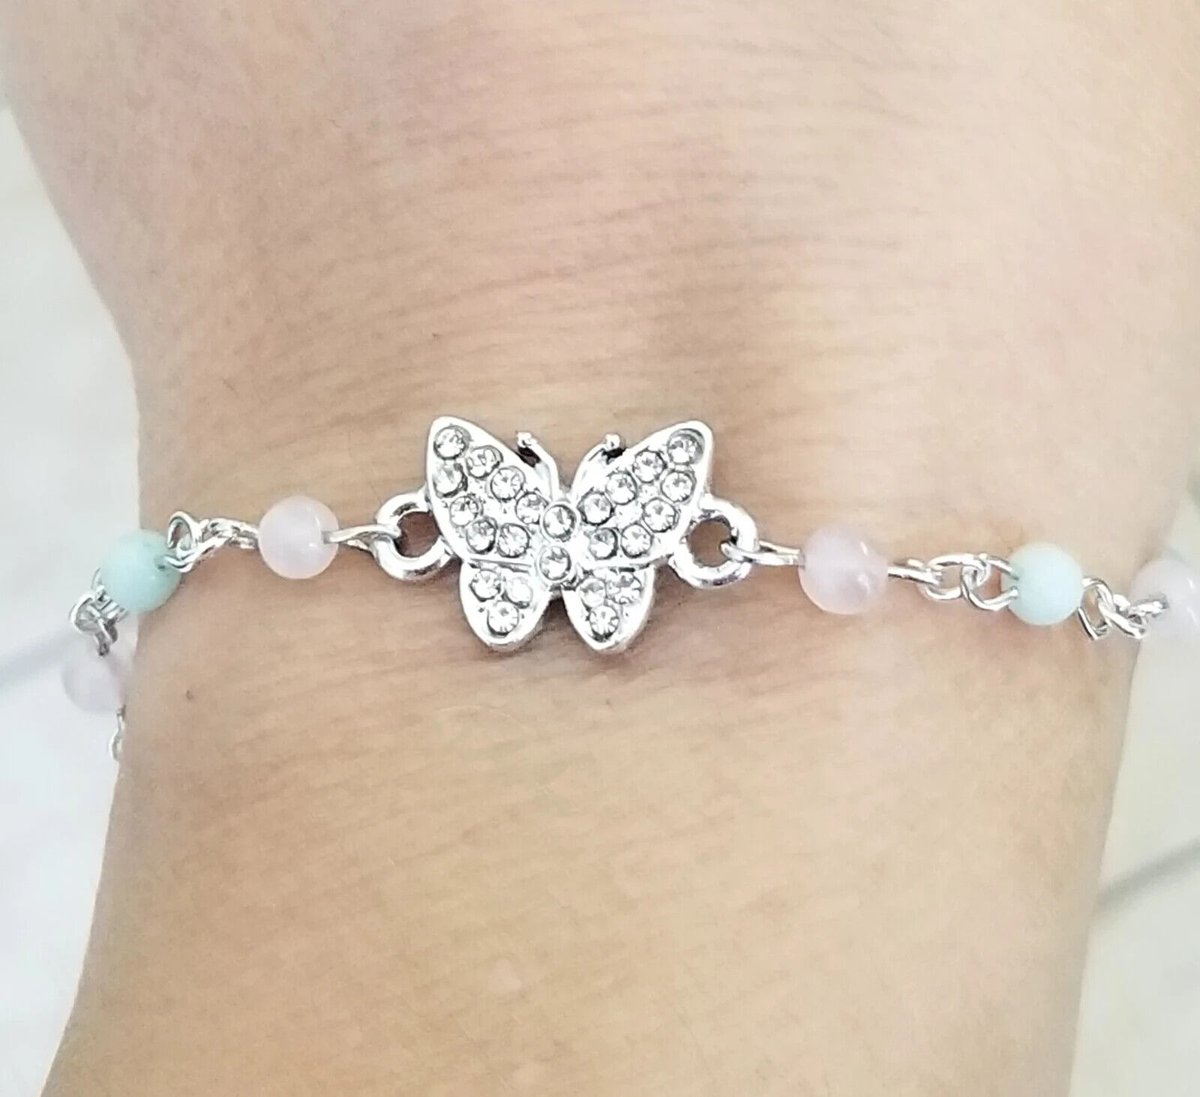 Silver Butterfly Bracelet Rose Quartz Bracelet Womens Amazonite Beaded Bracelet #jewelry #bracelets #silverbracelet #beadedbracelet #rosequartz #rosequartzjewelry #amazonite #butterfly #butterflies #cottagecore #fairycore #handmadejewelry

ebay.com/itm/2760847855… #eBay via @eBay